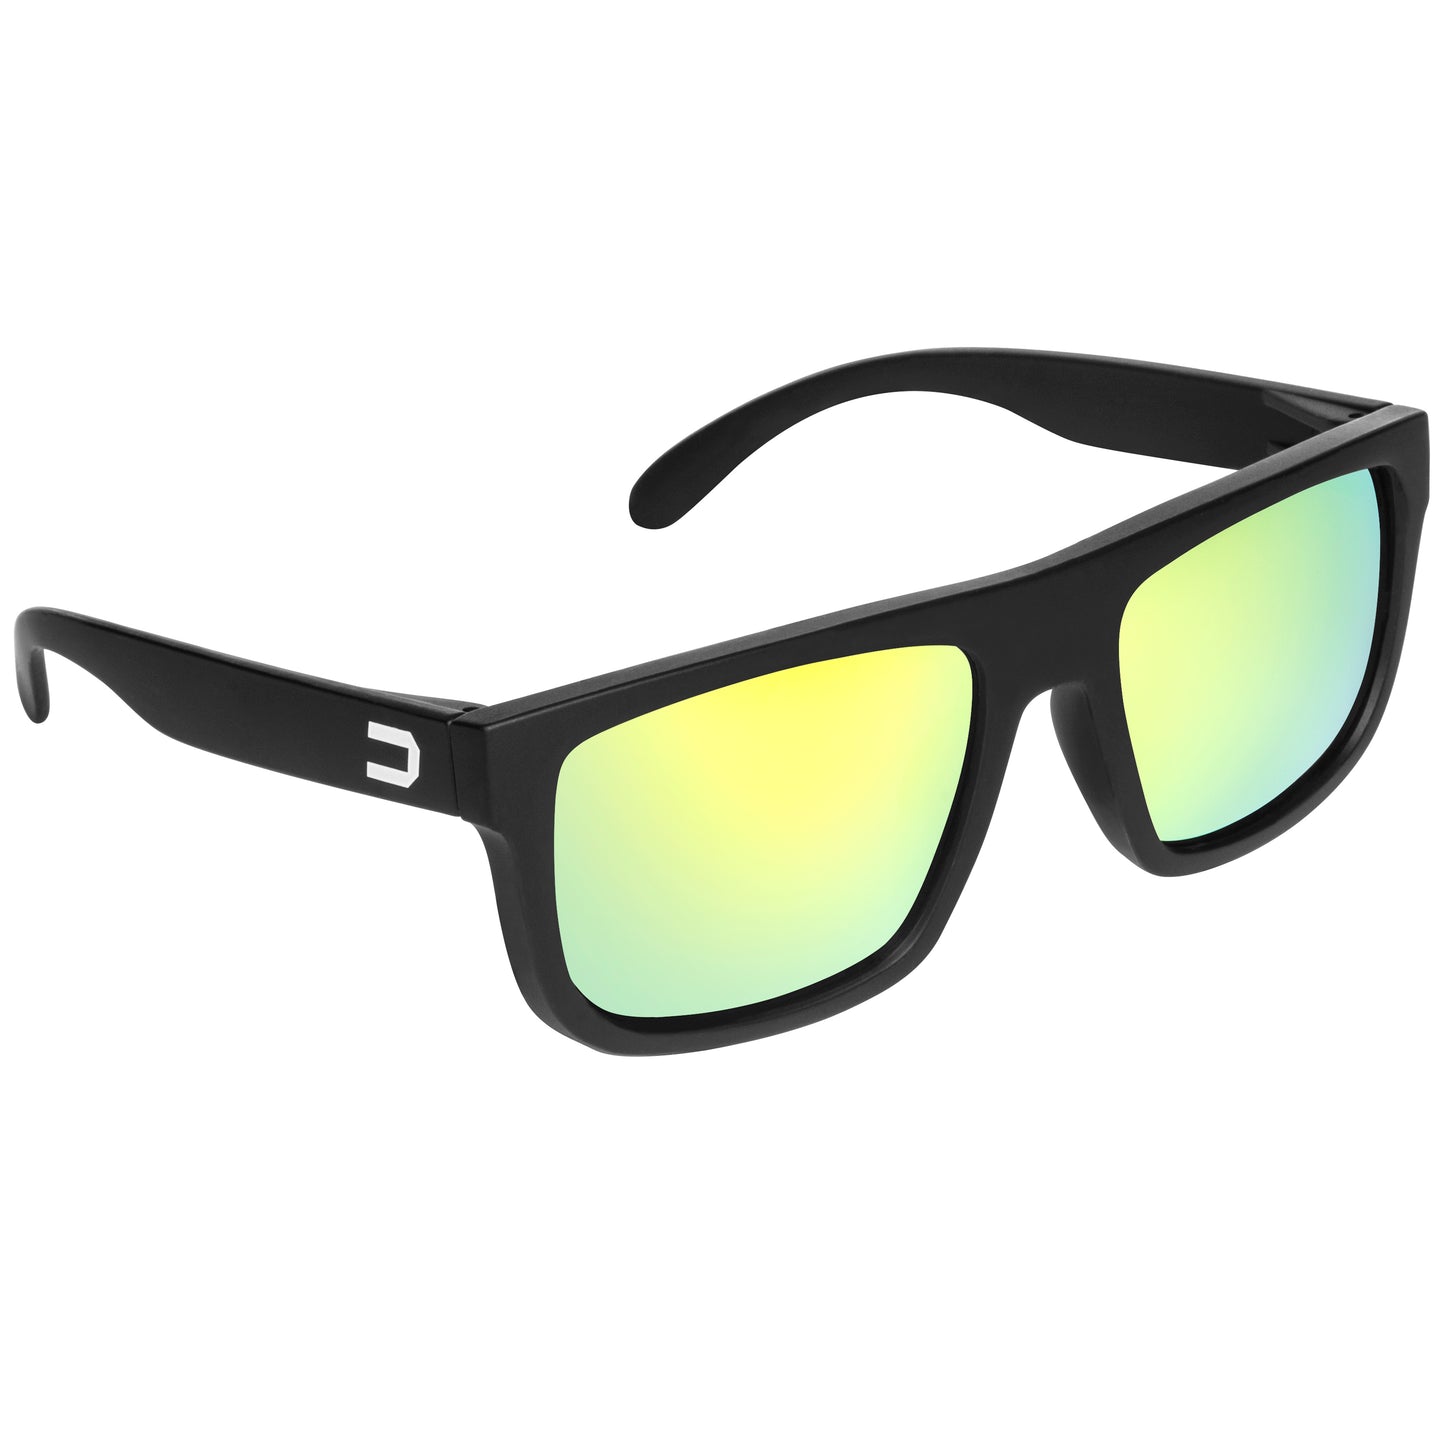 G Series Sunglasses